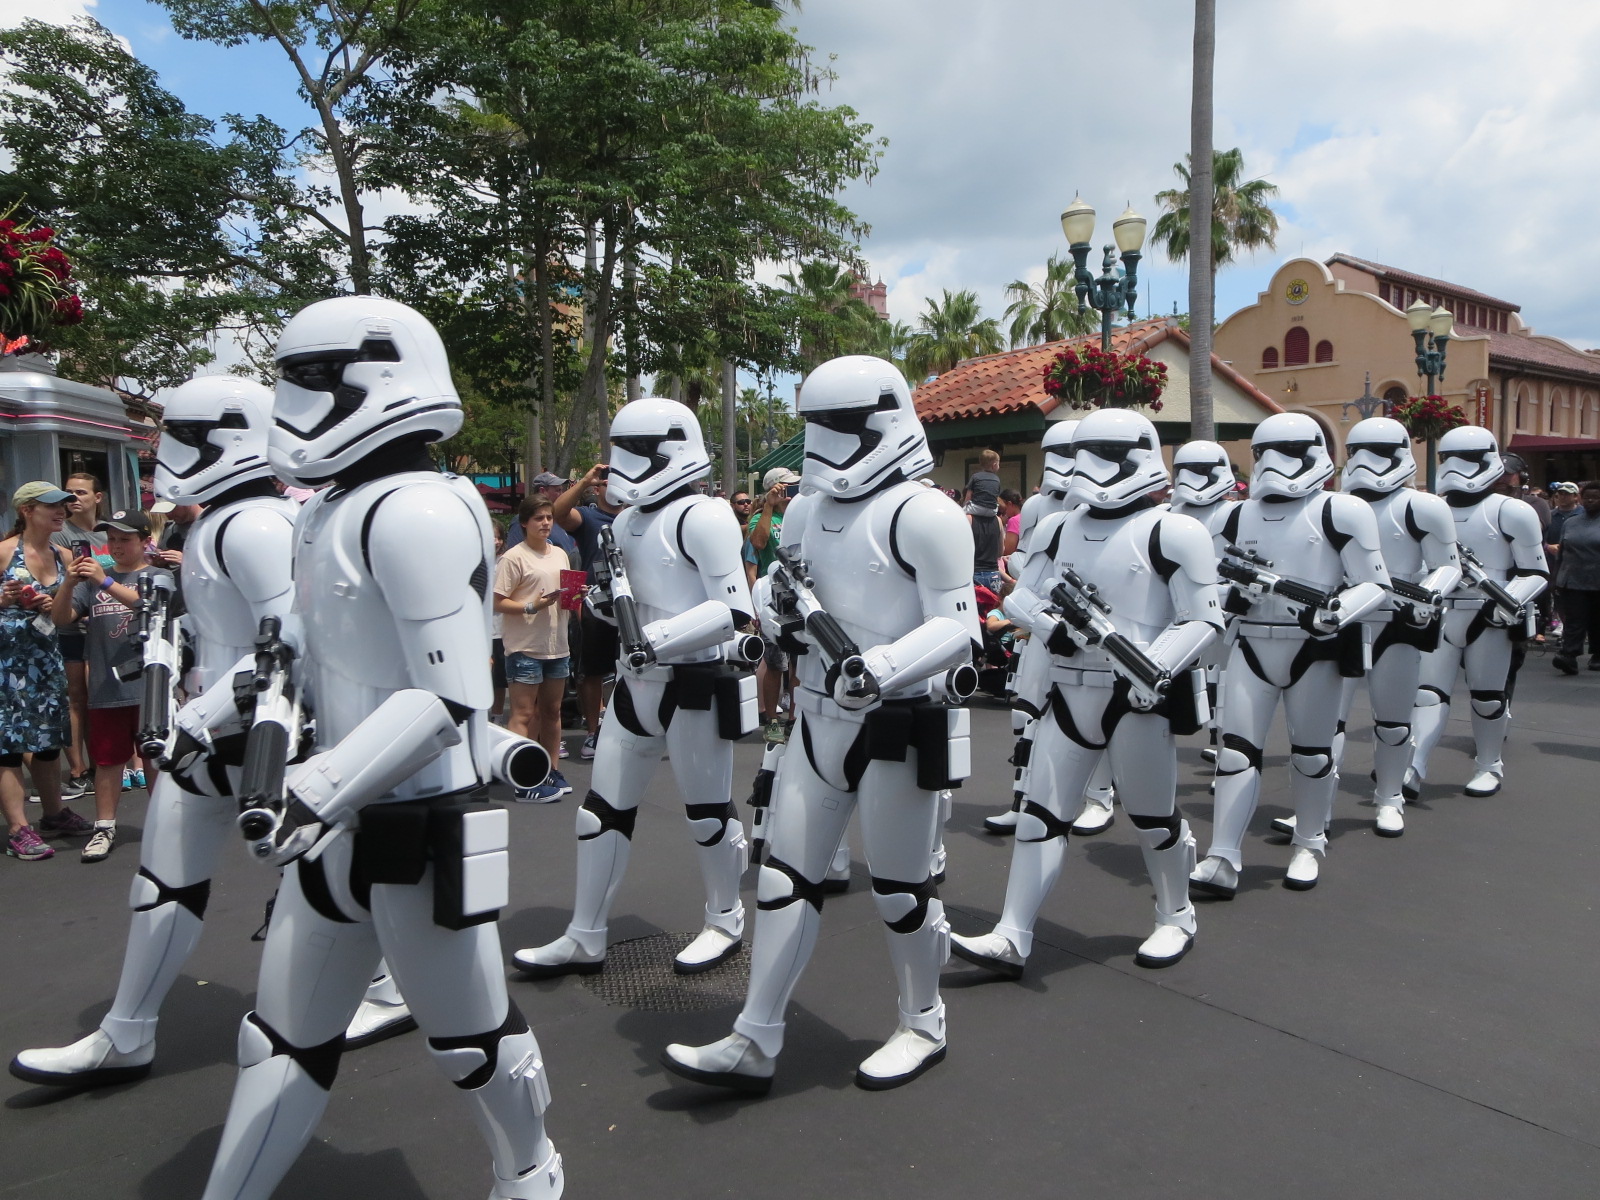 Image of Storm Trooper Mascots in high heat temperatures